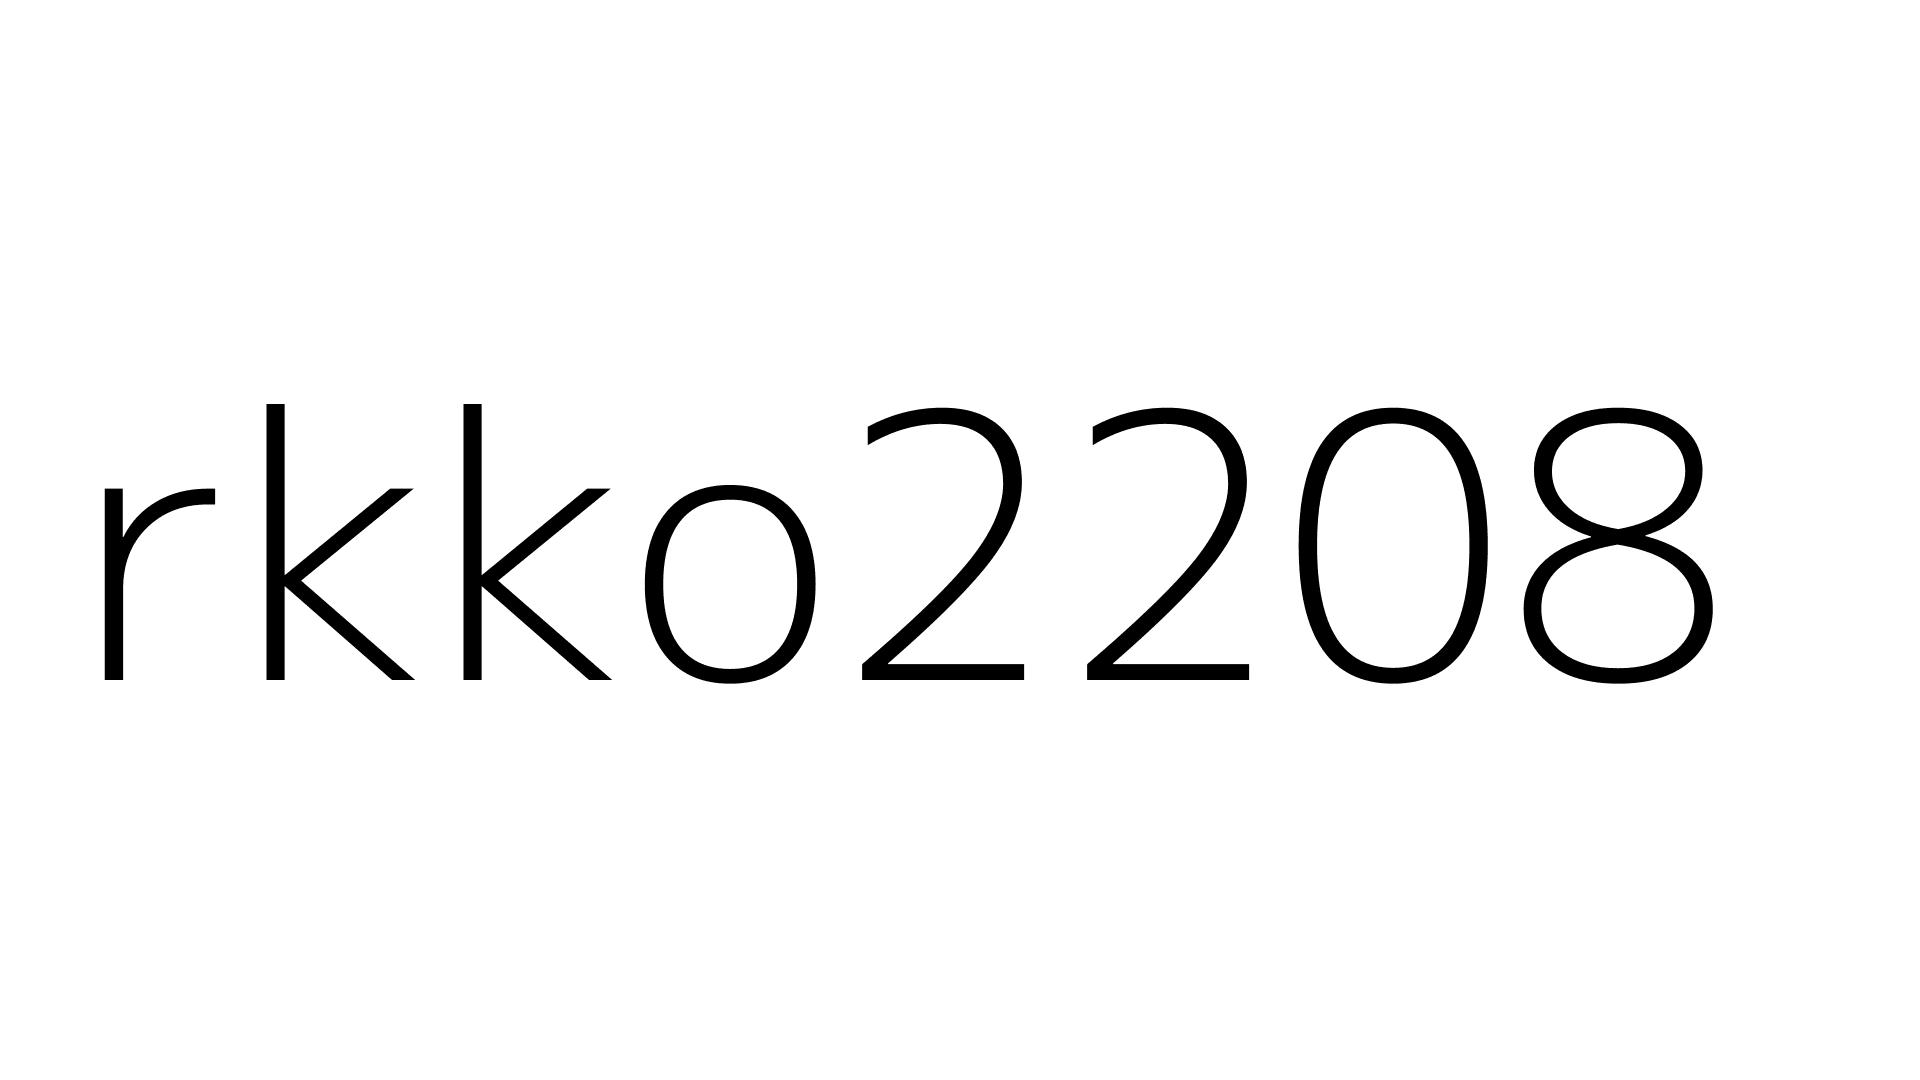 rkko2208